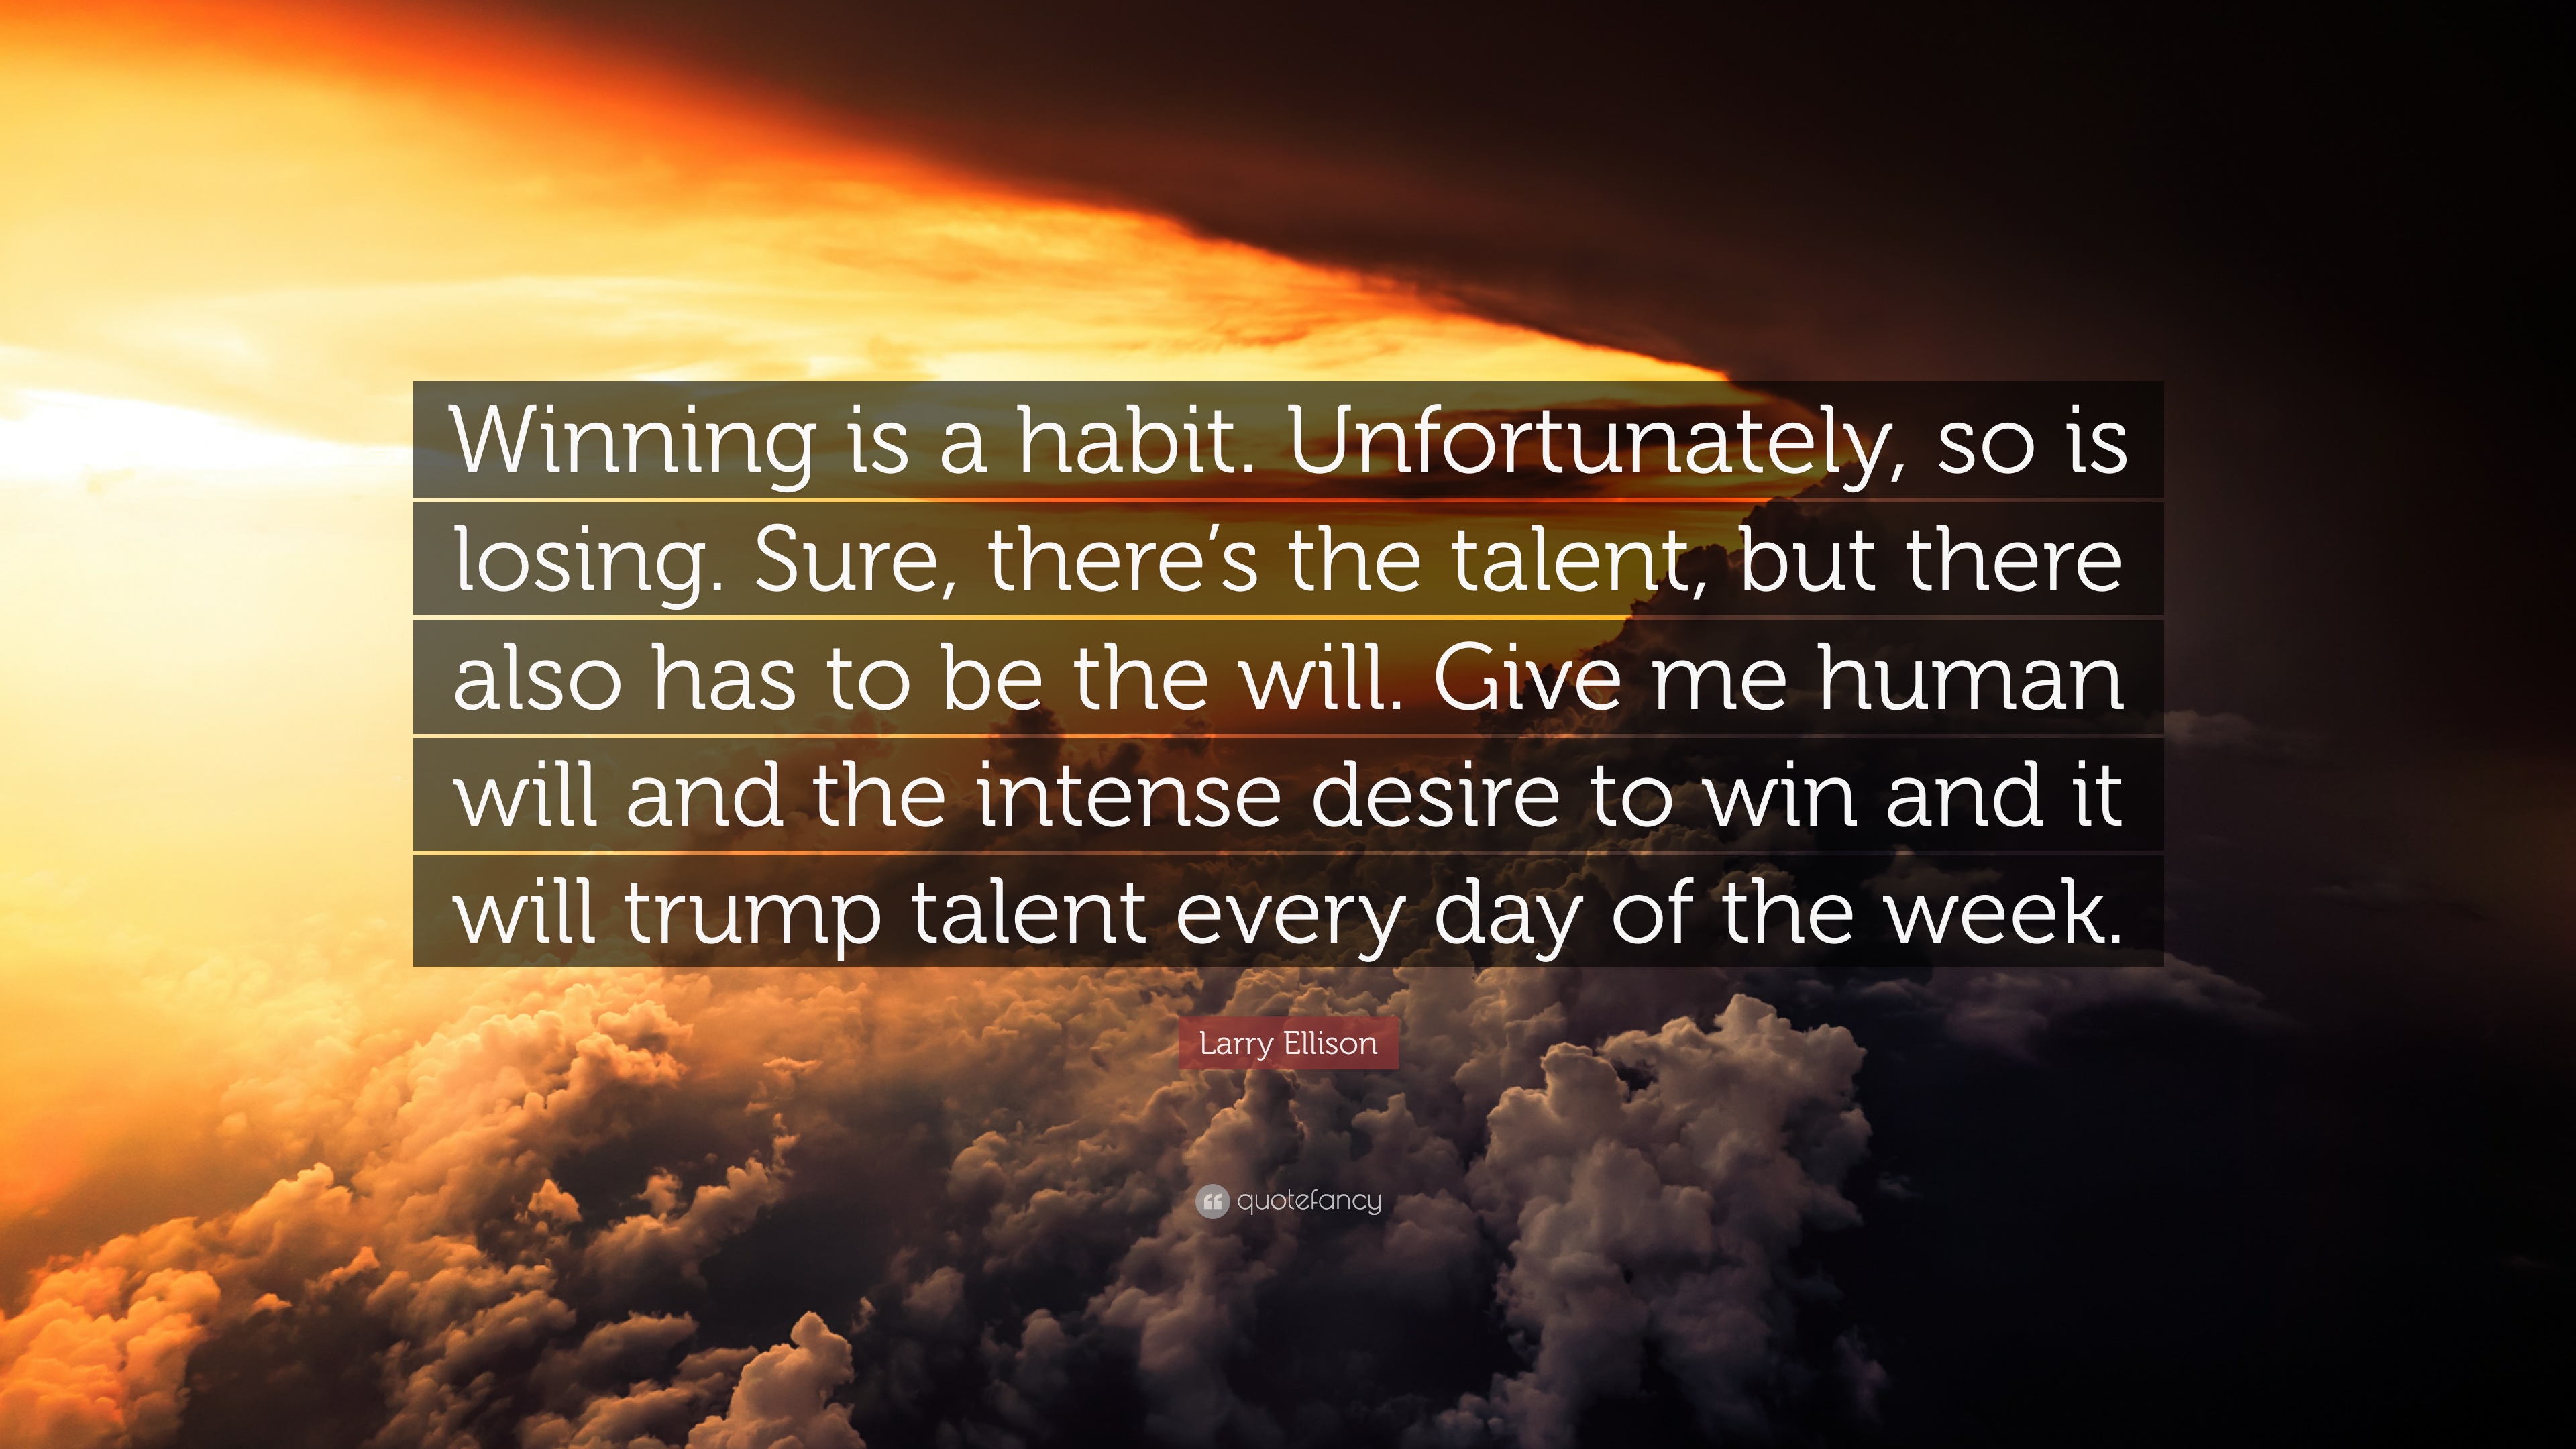 Larry Ellison Quote: “Winning is a habit. Unfortunately, so is